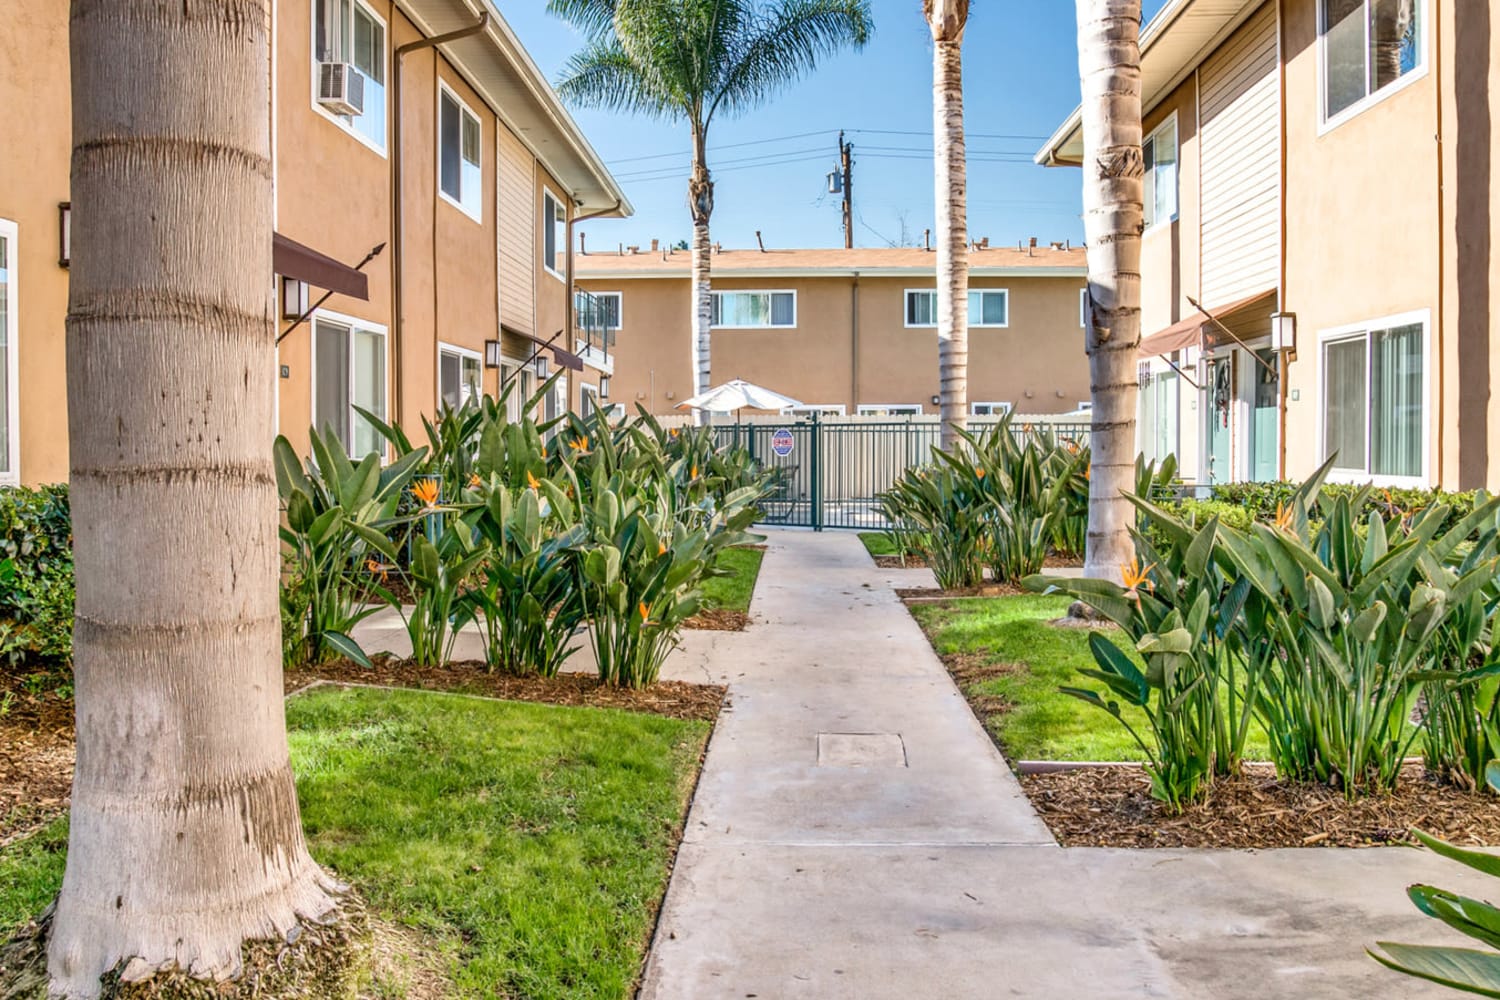 Olive Tree apartments in Costa Mesa, California